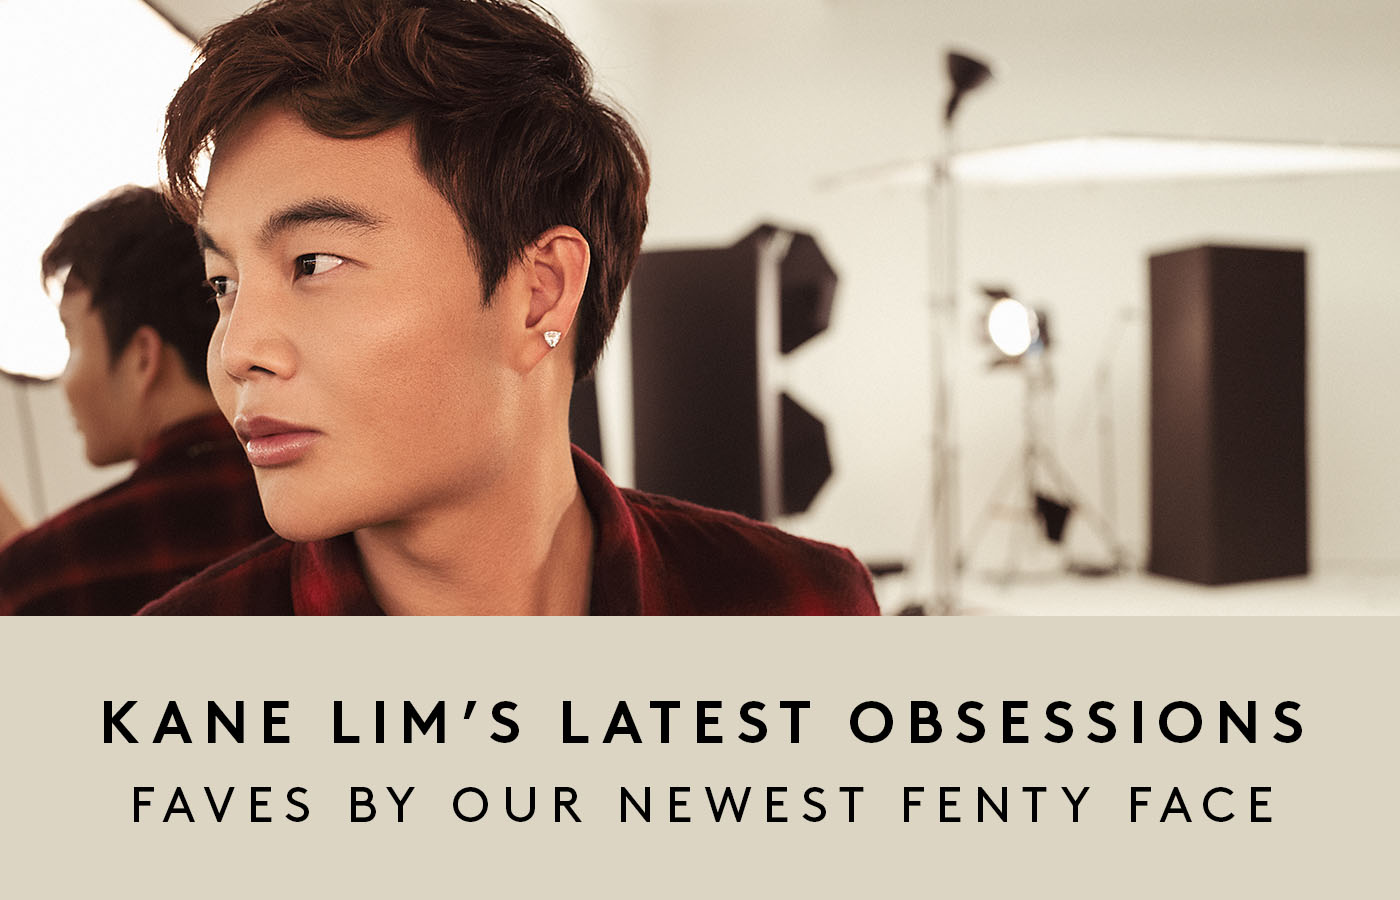 Kane Lim is Fenty Beauty's new brand ambassador